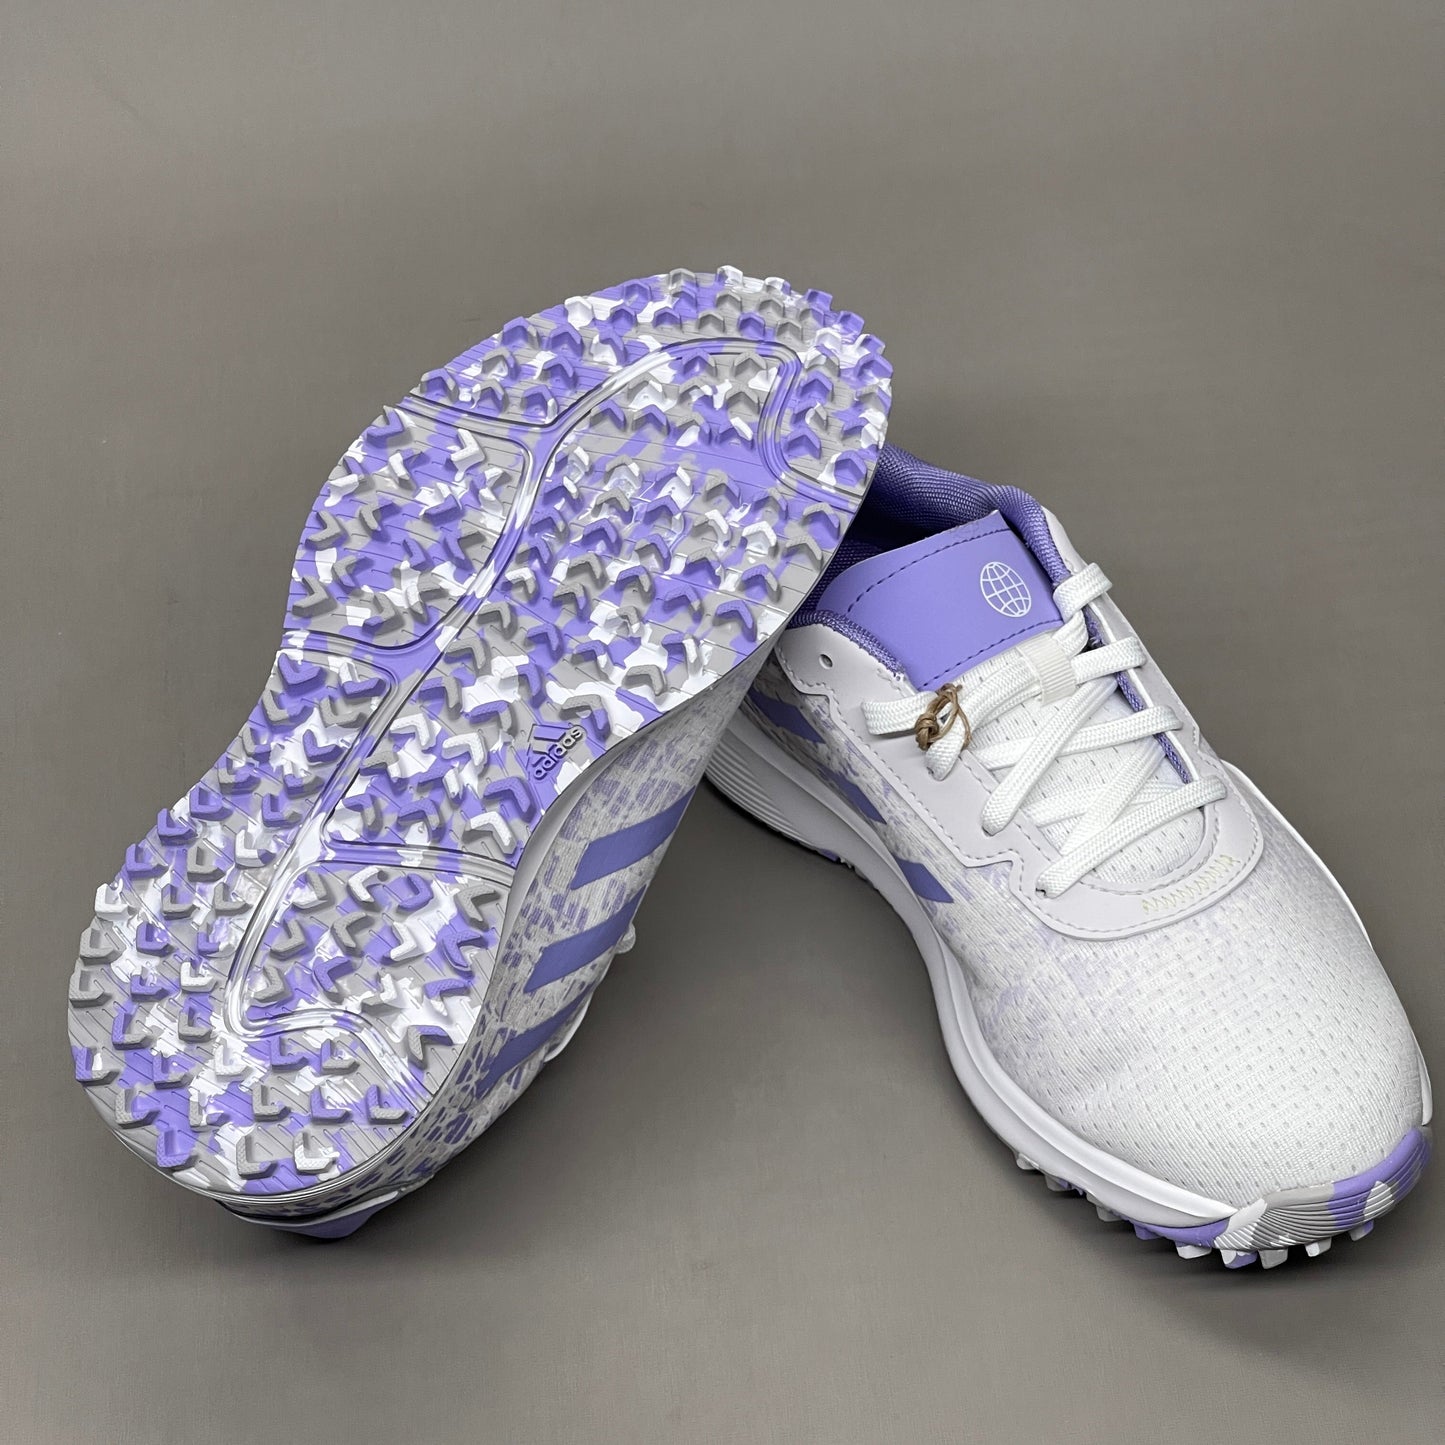 ADIDAS Golf Shoes JR S2G SL Waterproof Youth Sz 4.5 White / Lime / Purple GV9787 (New)